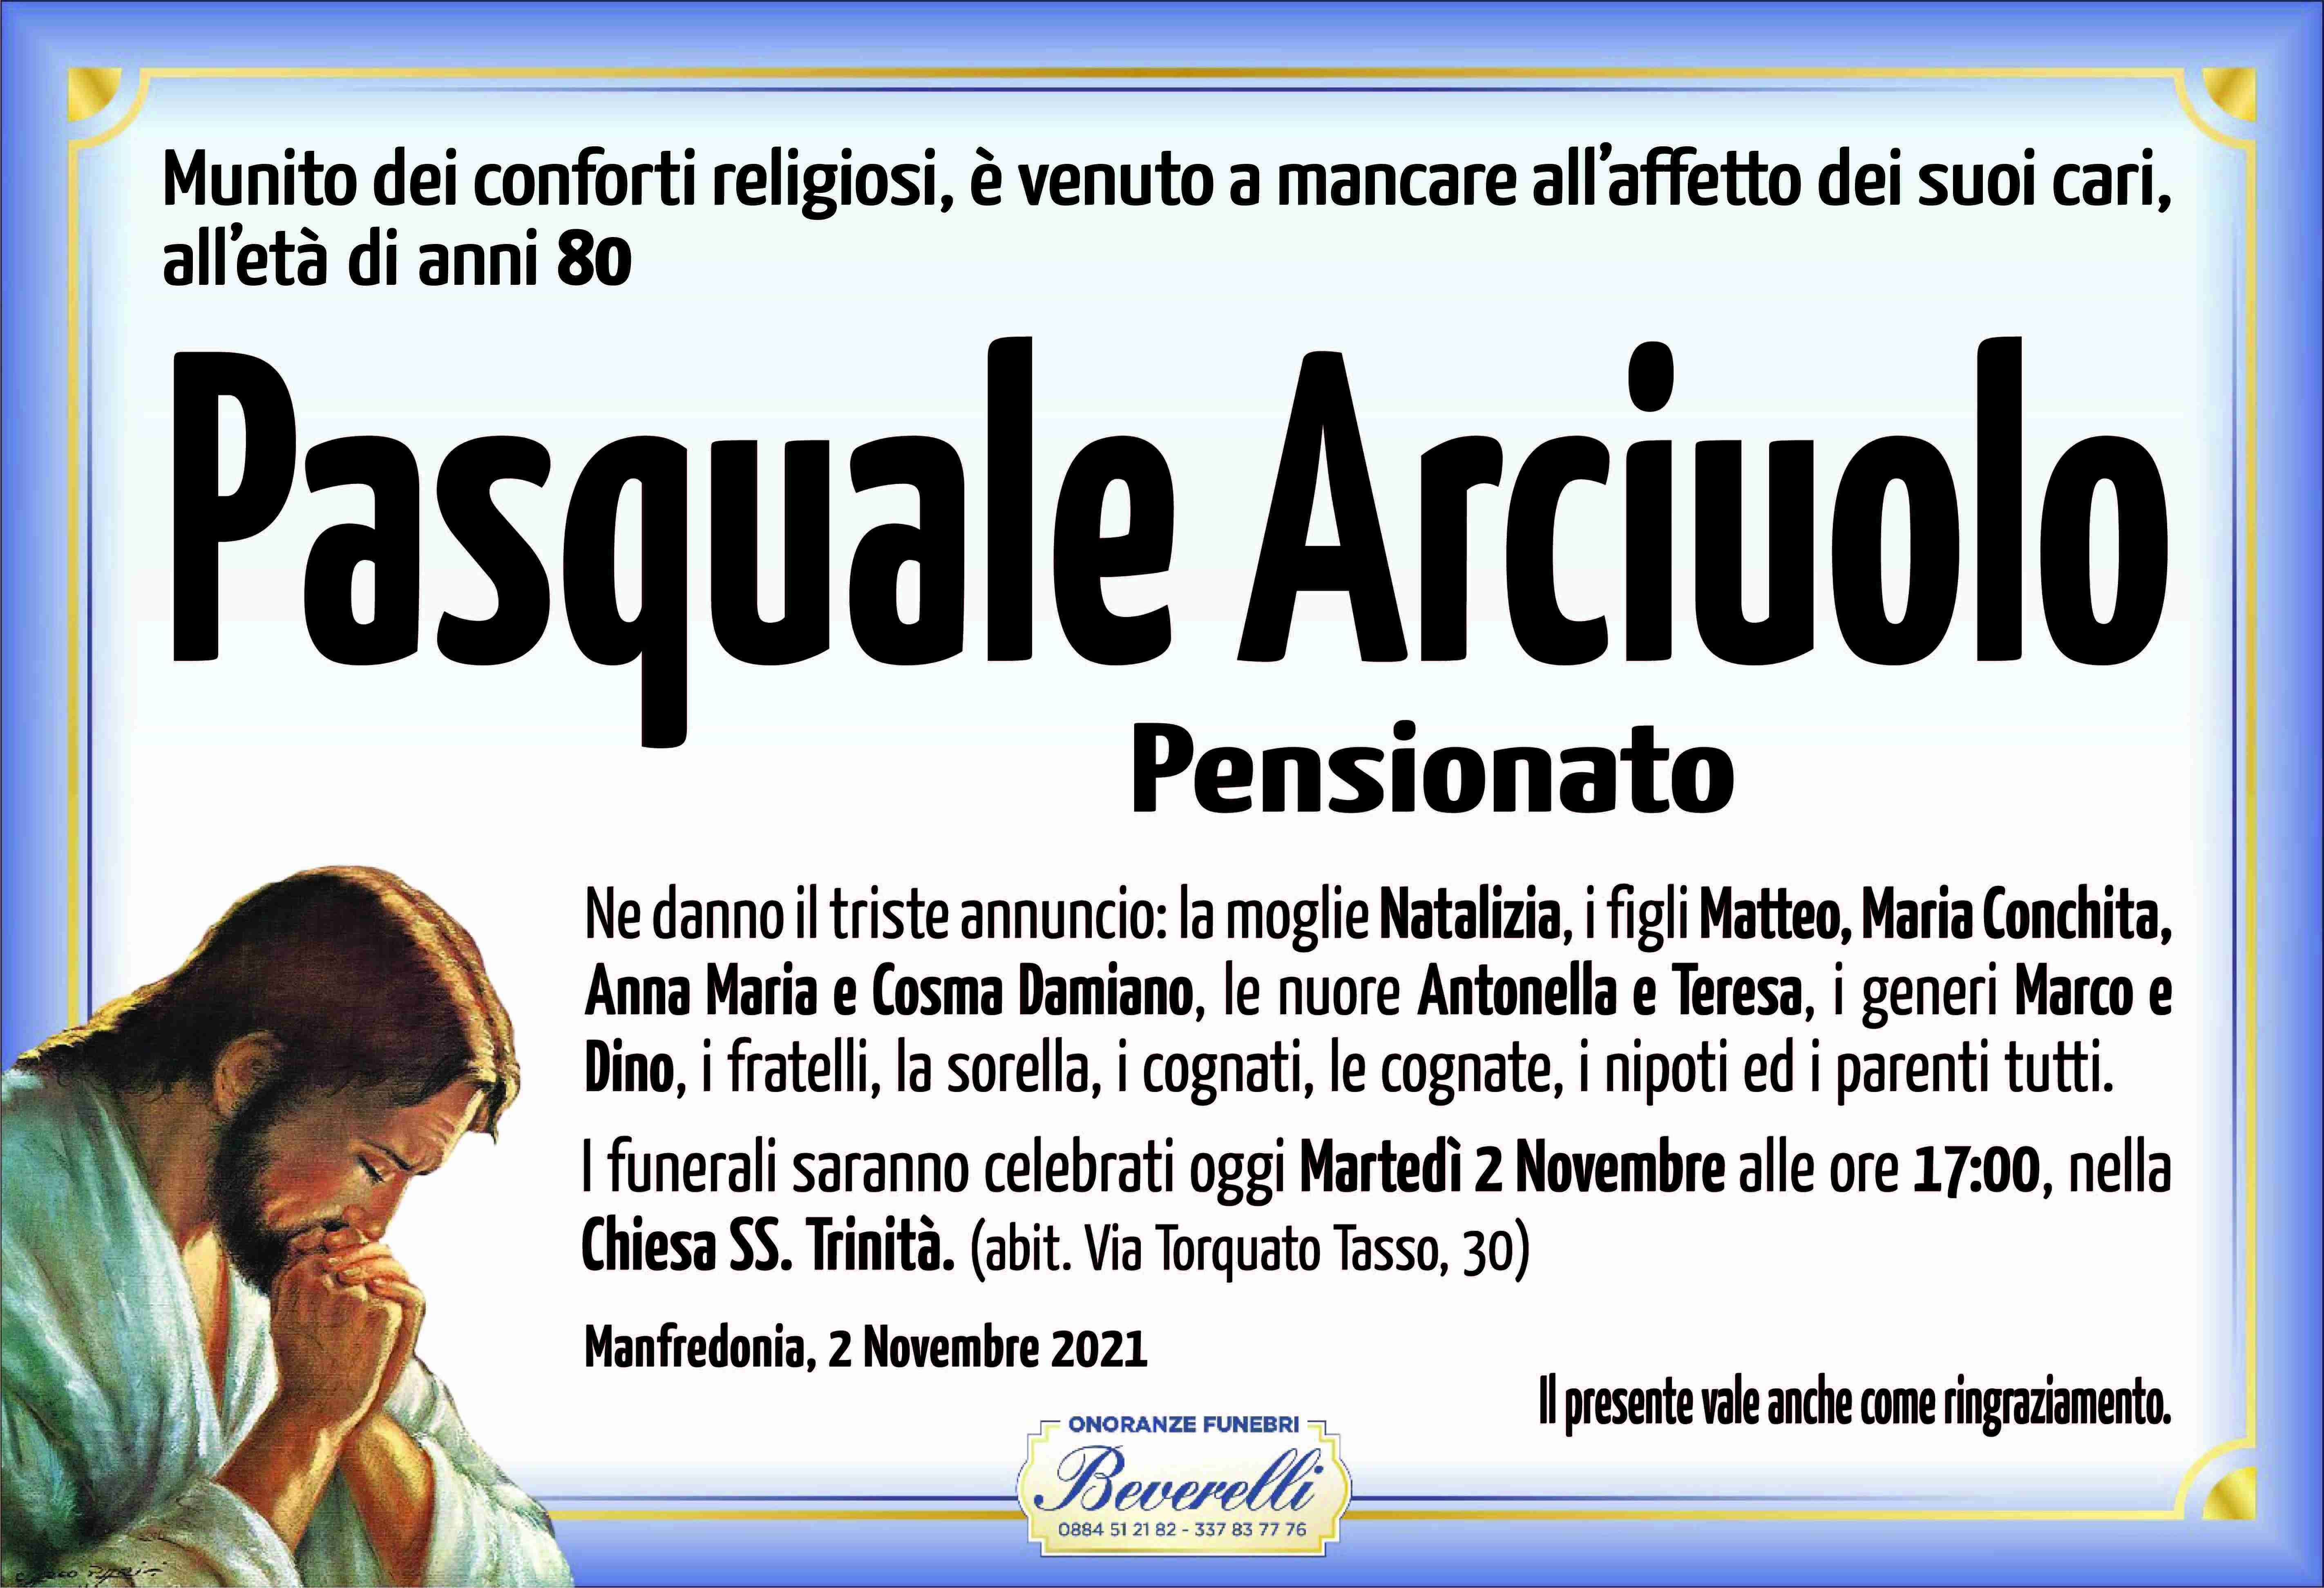 Pasquale Arciuolo